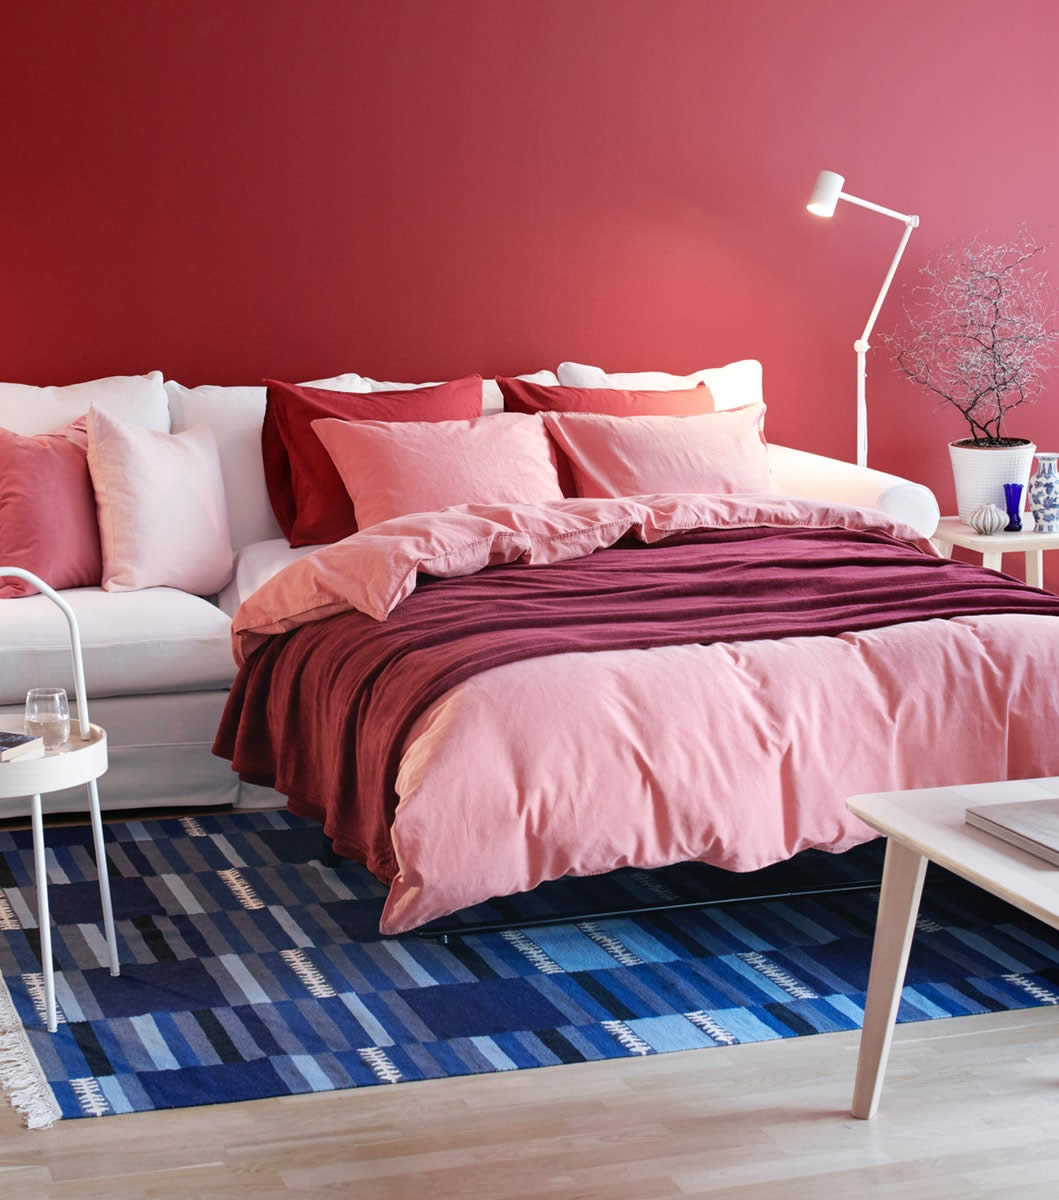 IKEA Ideas - A living room for sleep-ins